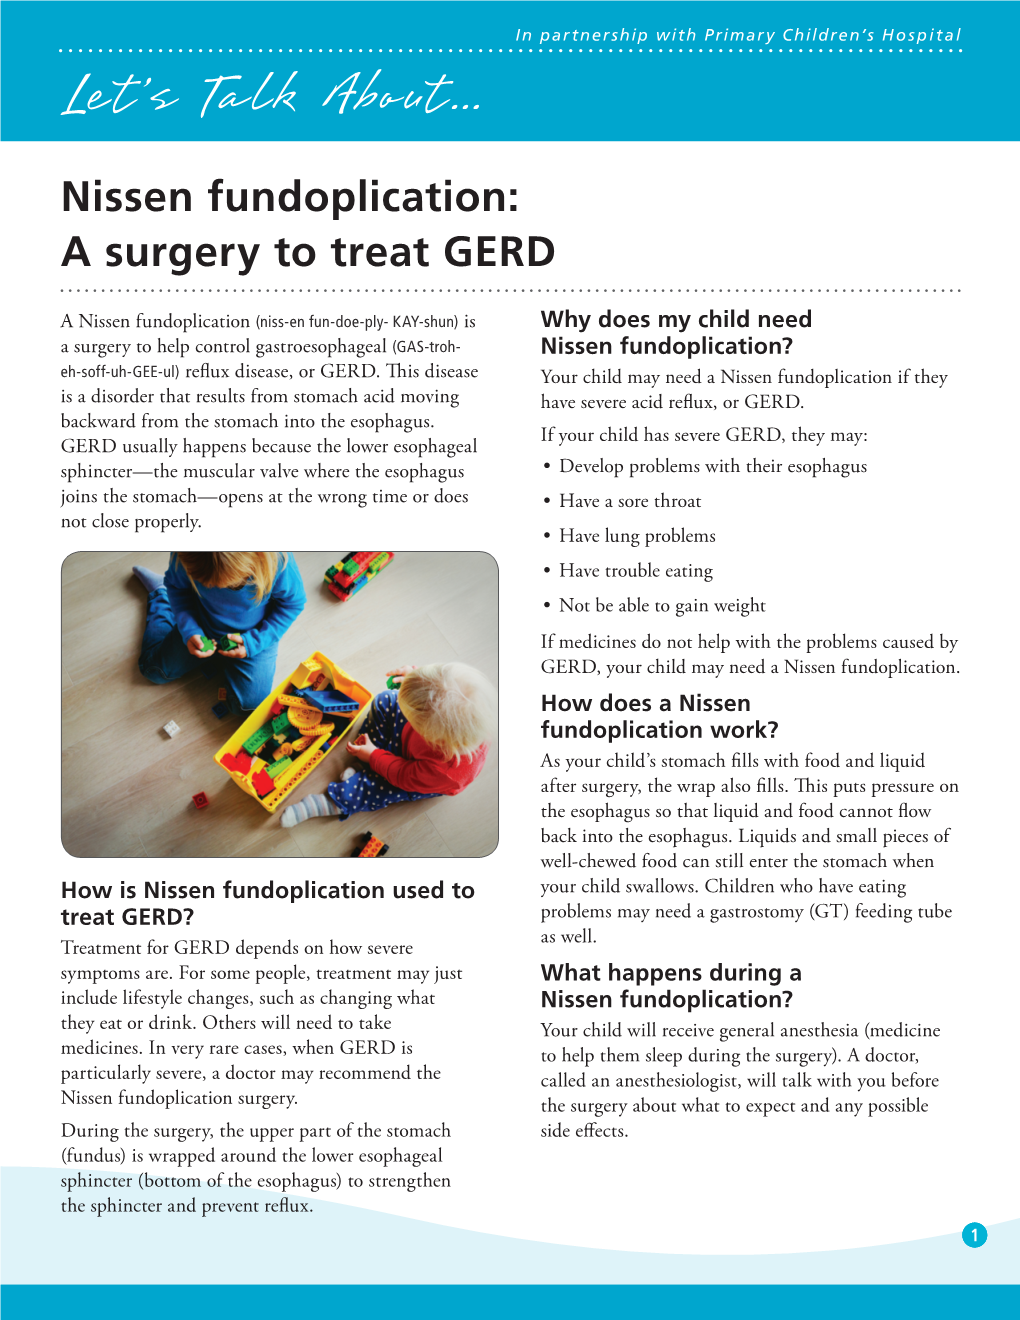 Nissen Fundoplication: a Surgery to Treat GERD